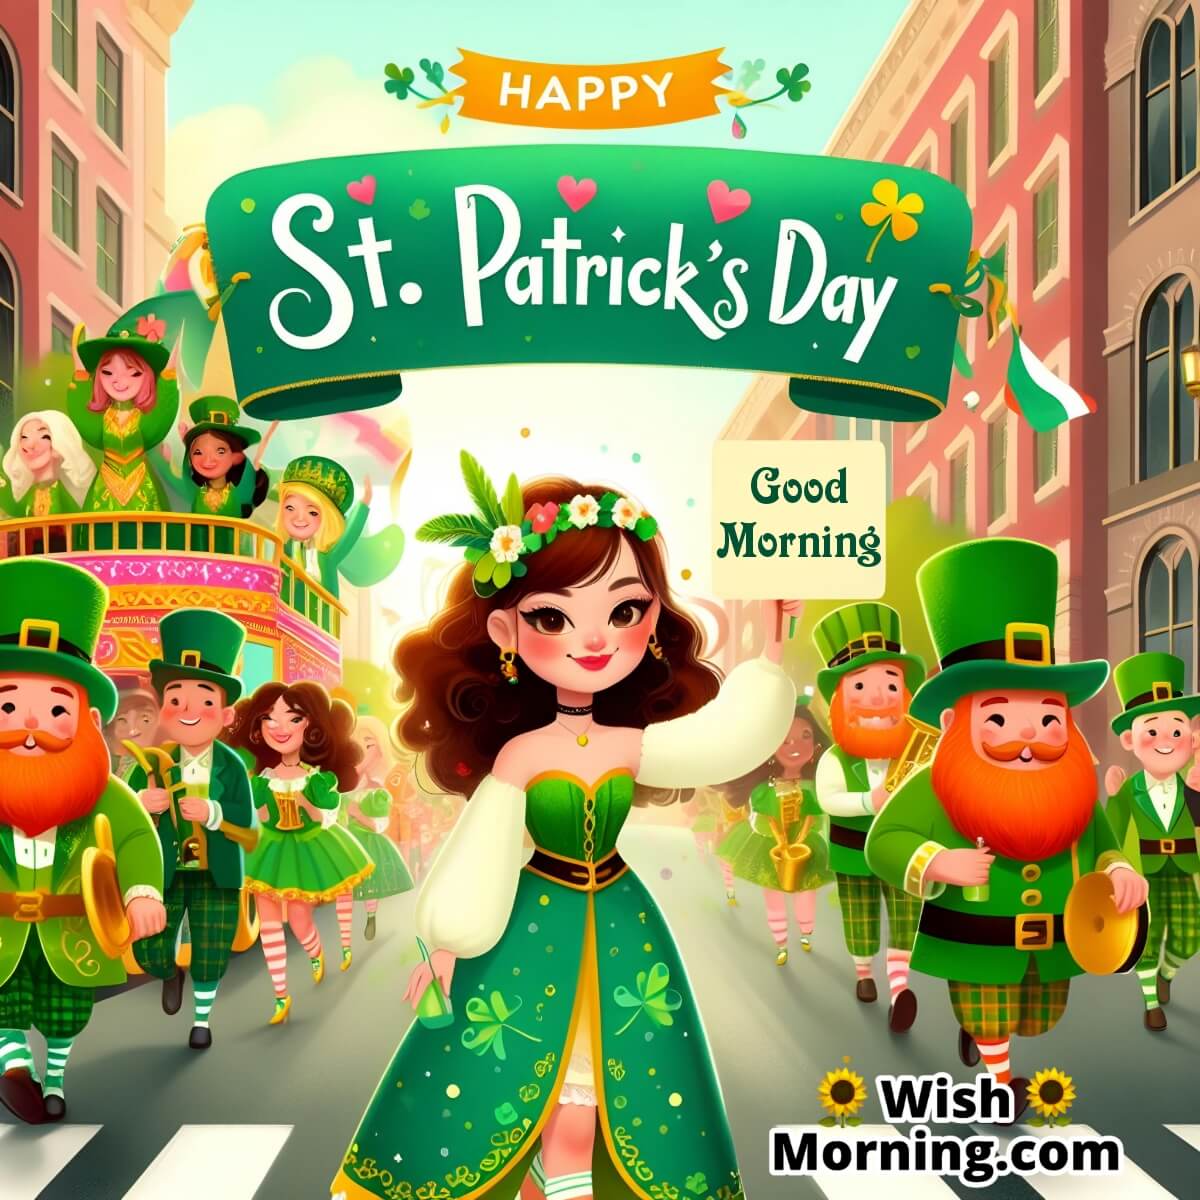 Good Morning St. Patrick's Day Parade